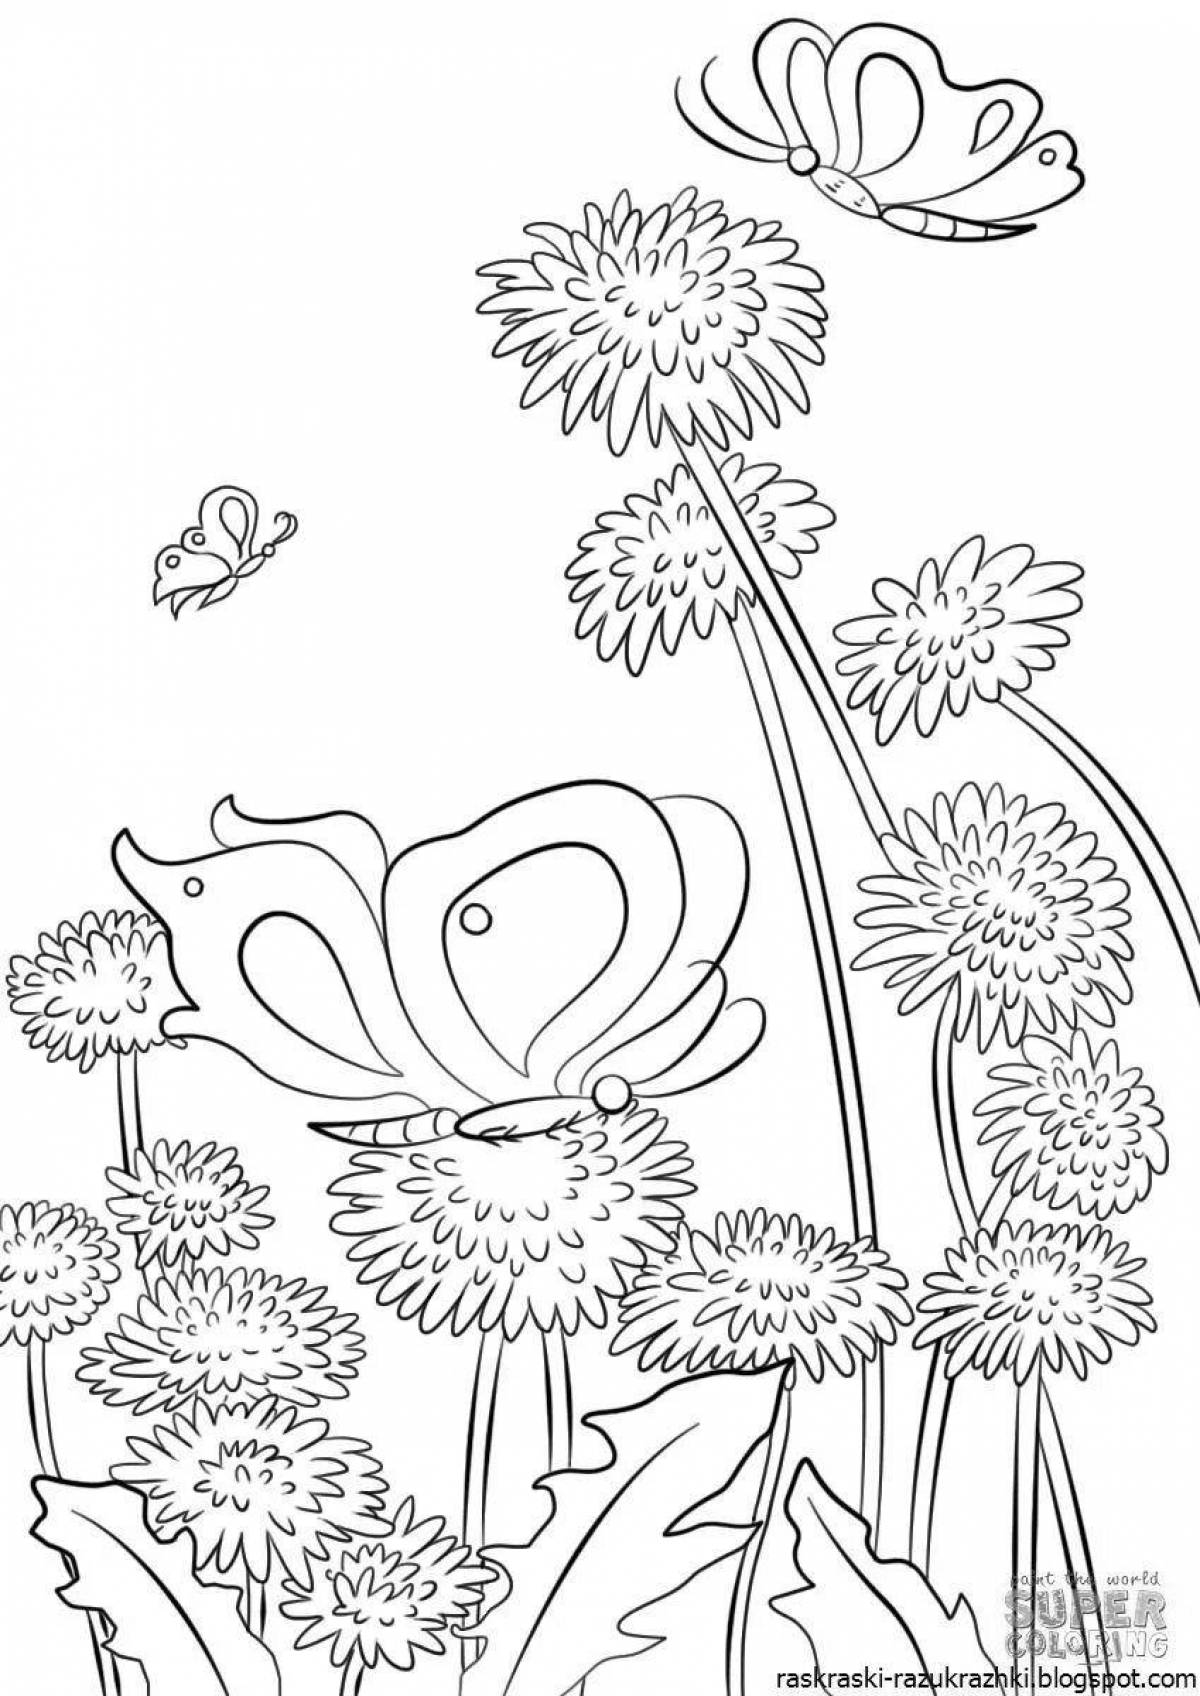 Joyful dandelion coloring book for kids